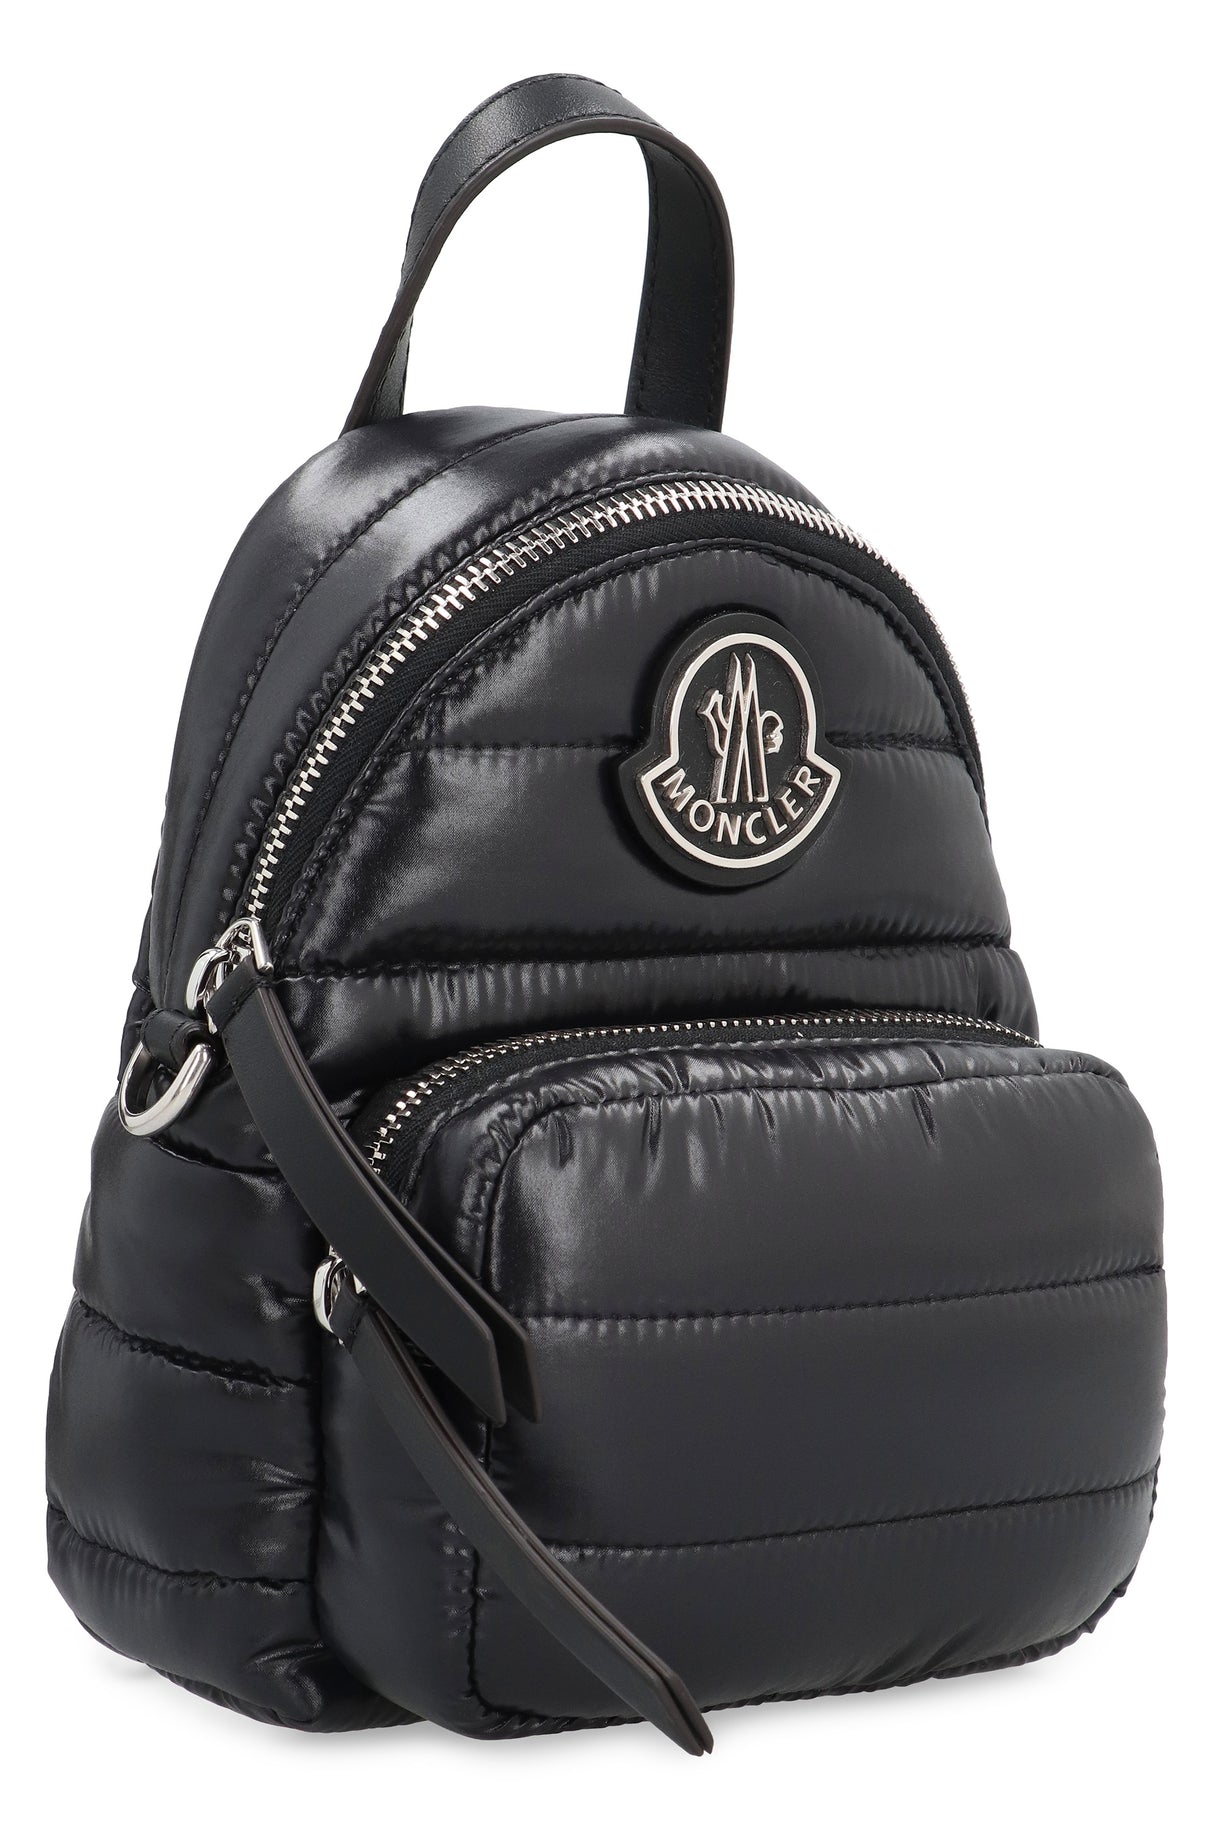 MONCLER Black Nylon Messenger Handbag - Padded, Removable Strap, Silver-Tone Hardware